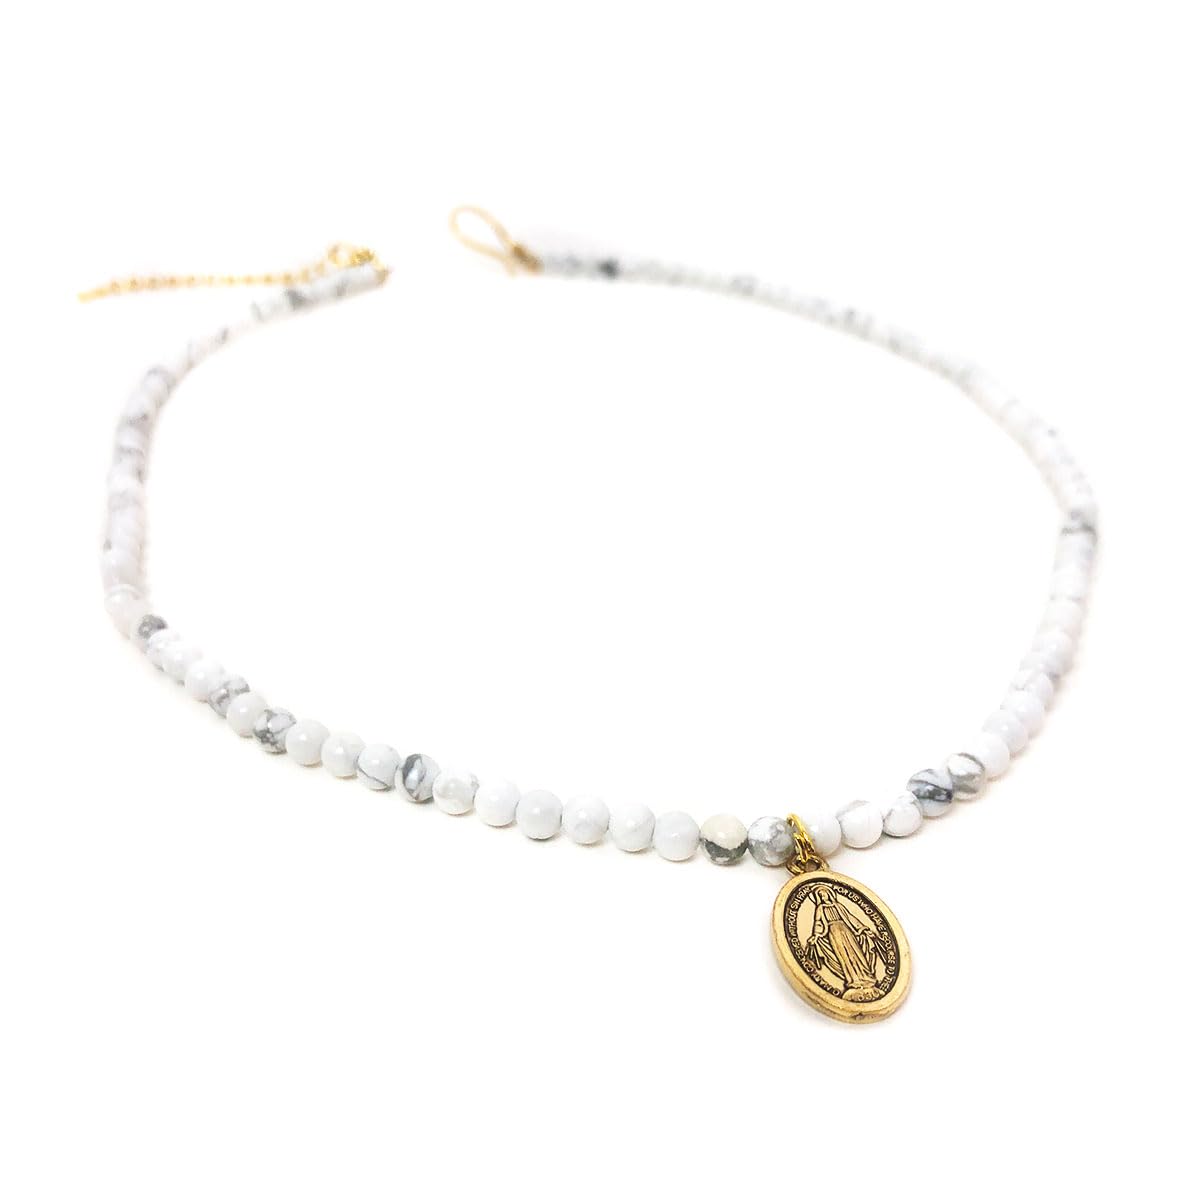 Miraculous Medal White Howlite Stone Necklace & Dainty Rosary Bracelet Set by DALIA LORRAINE